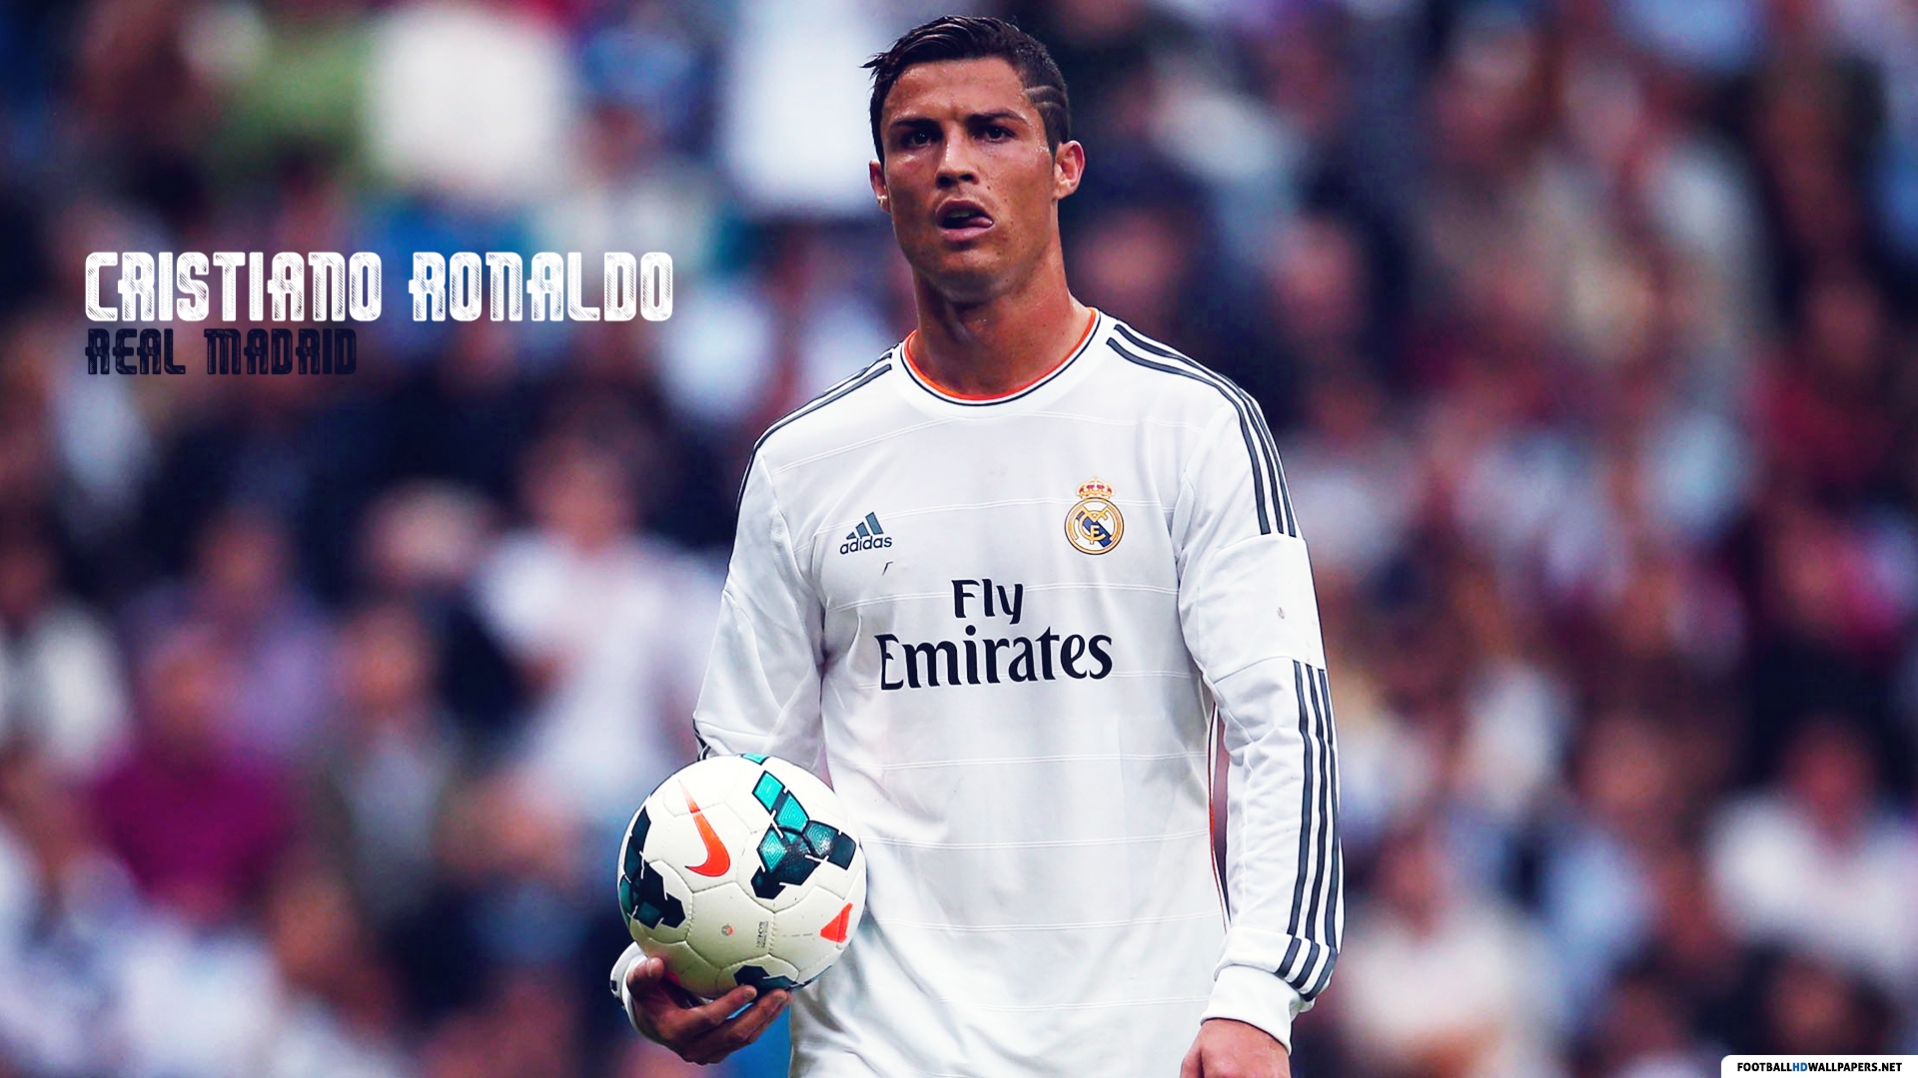 More Of Cristiano Ronaldo Real Madrid Wallpaper Full HD